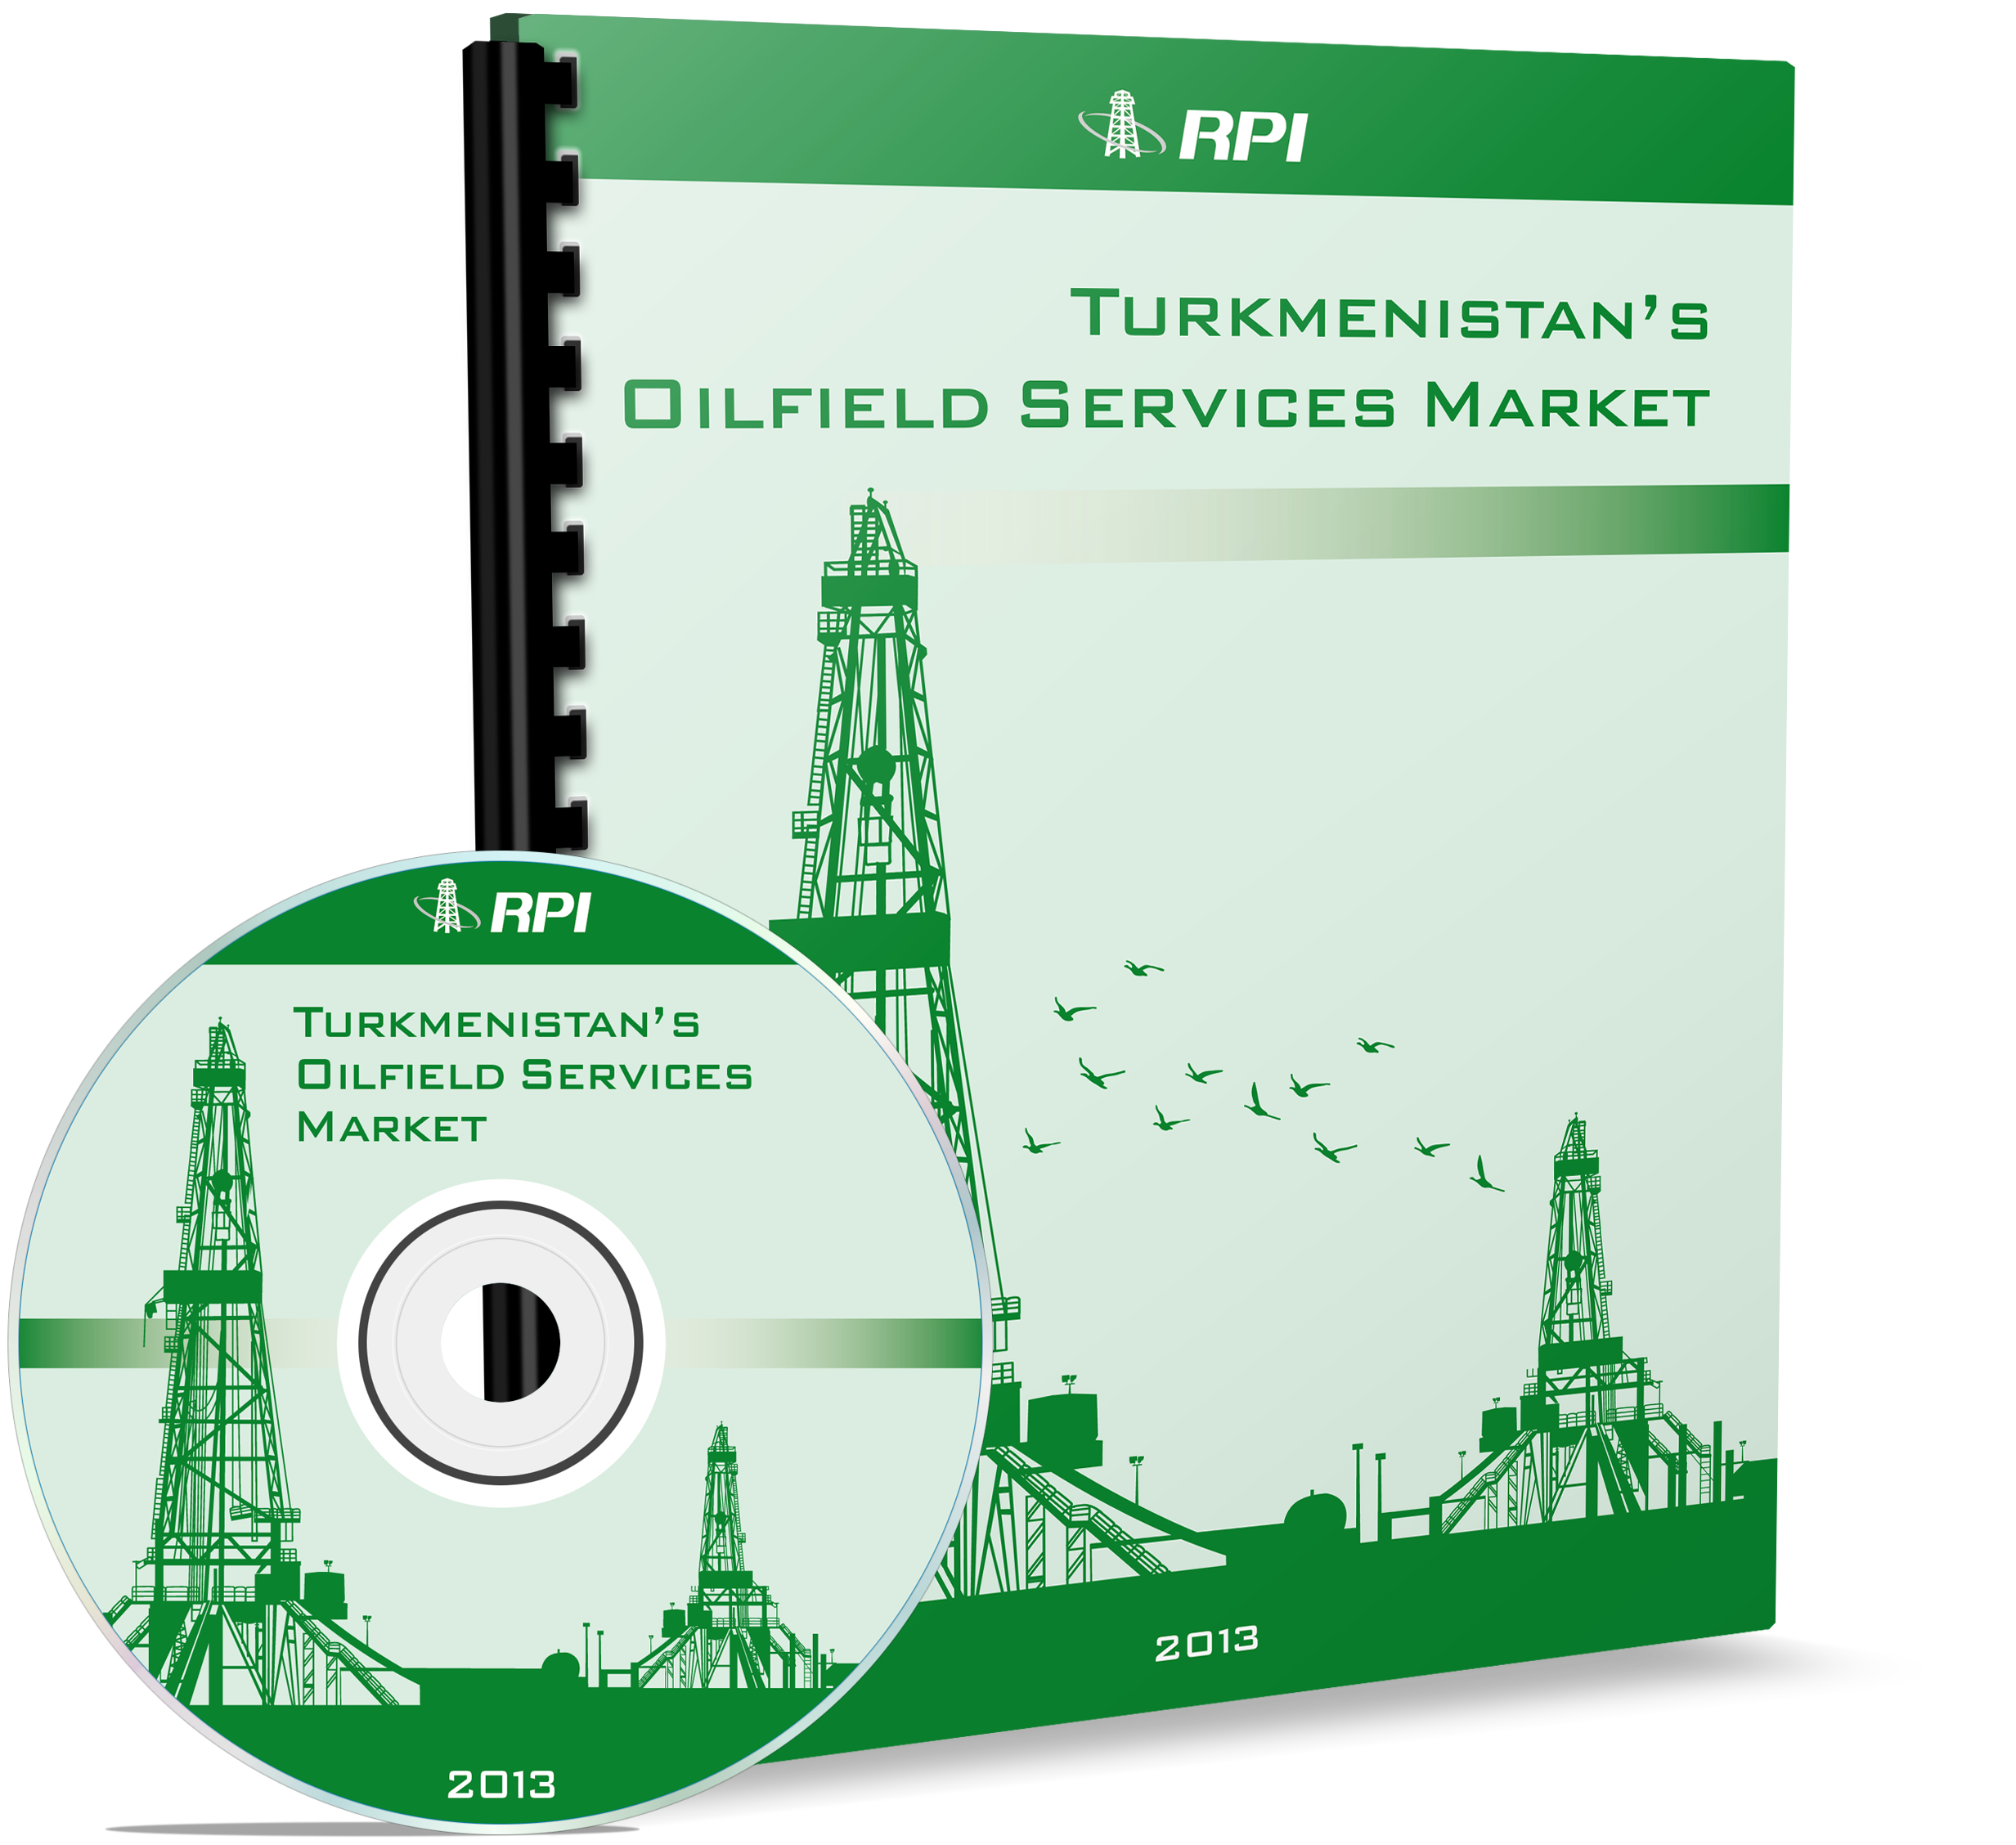 Turkmenistan's Oilfield Services Market 2013